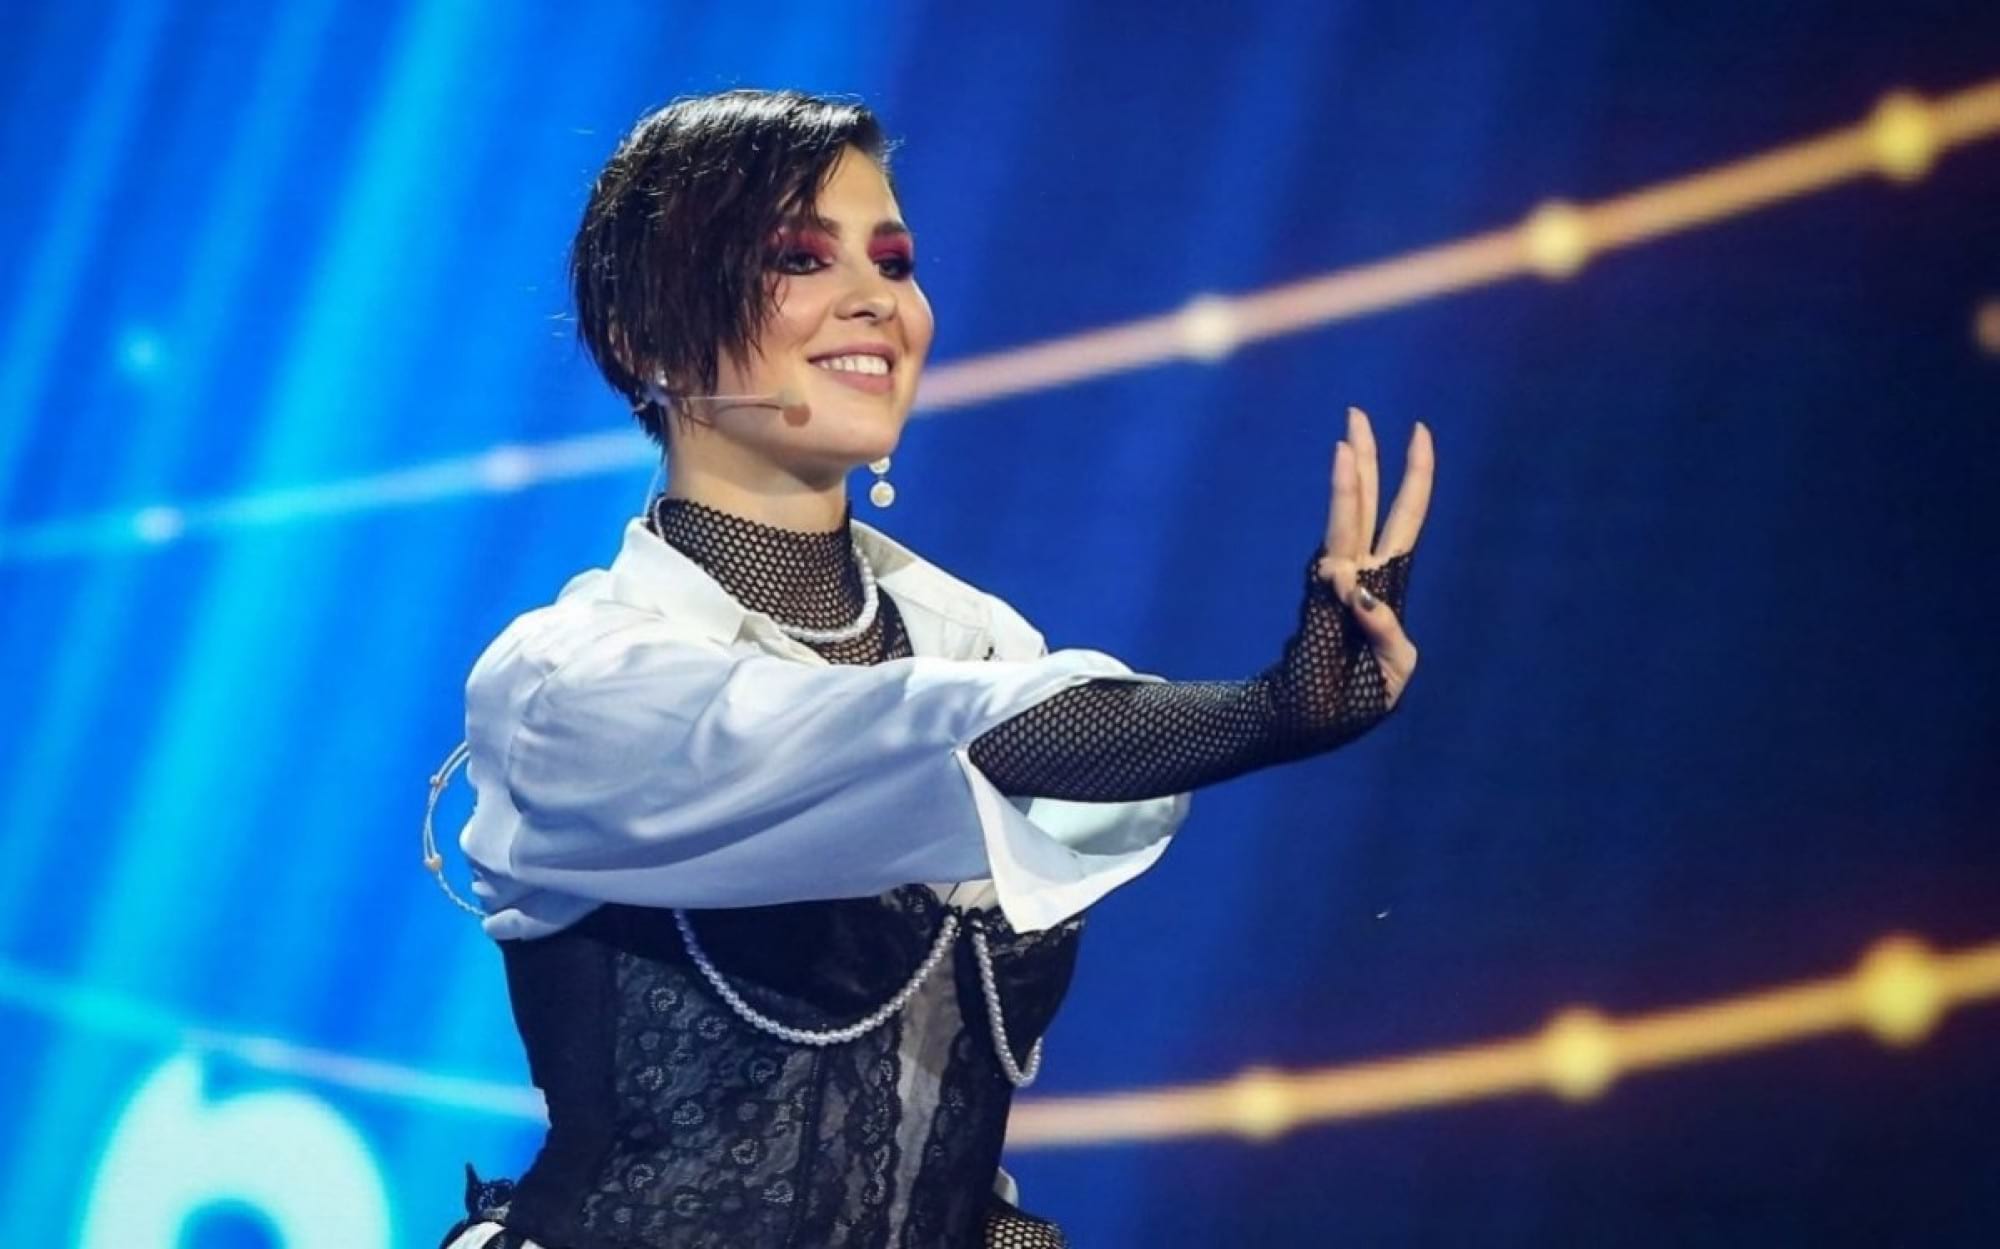 eurovision ukraine 2020